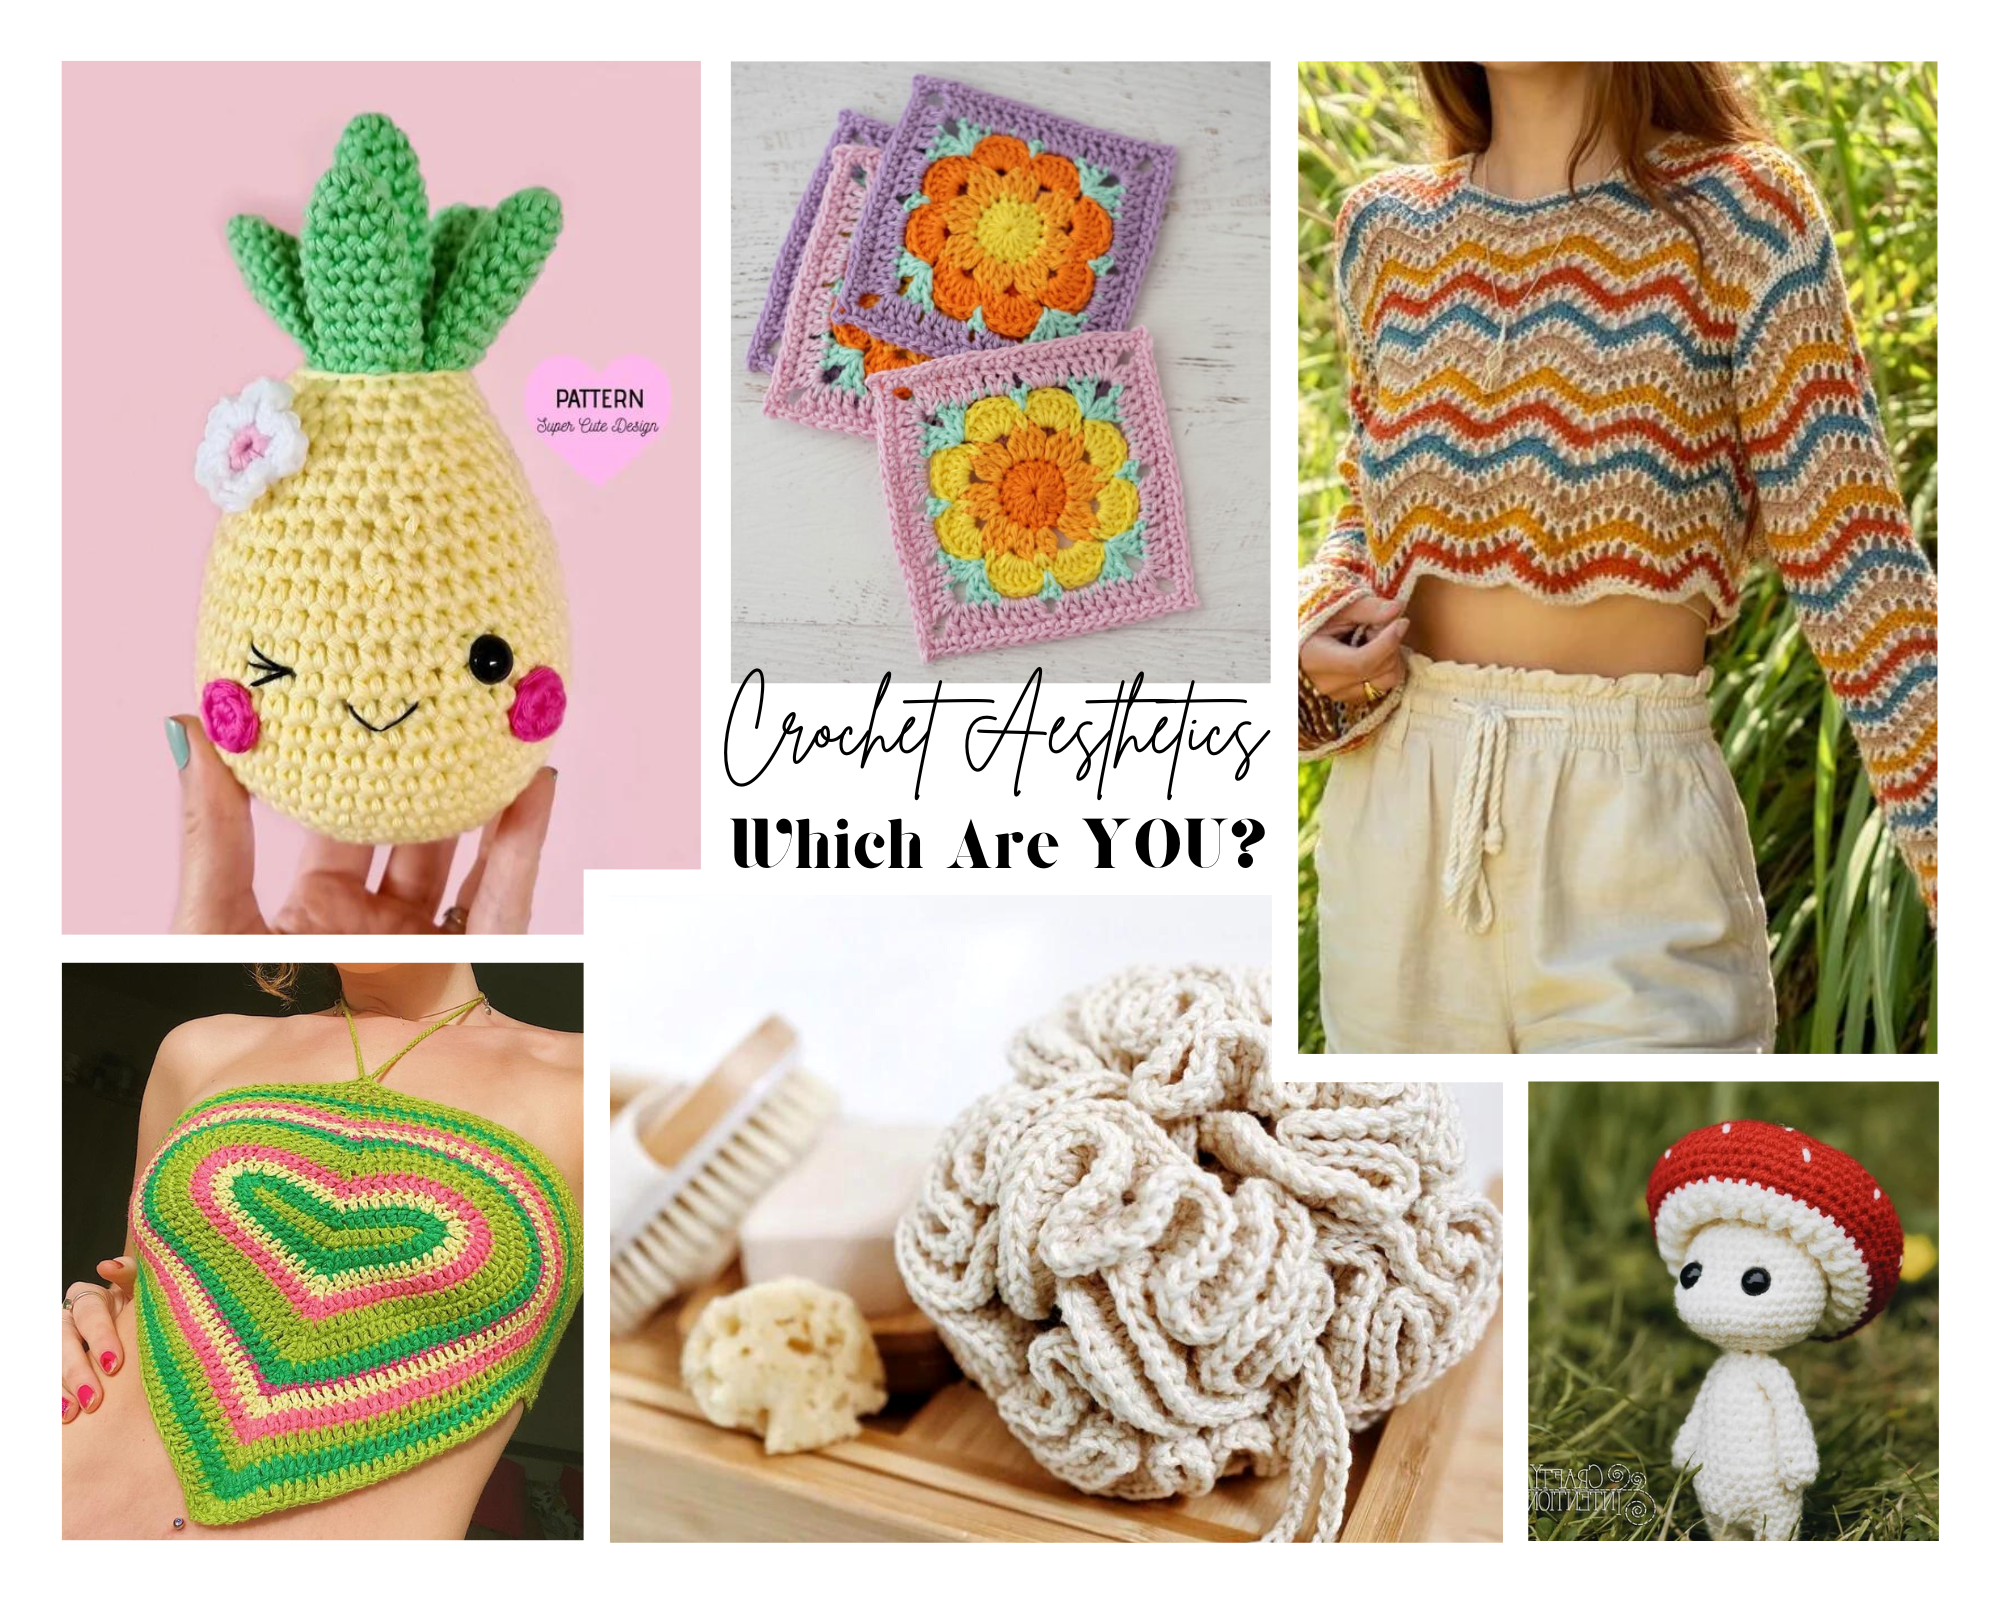 collage of crochet pineapple amigurumi, flower coasters, vintage sweater, mushroom amigurumi, white loofah, and heart crop top